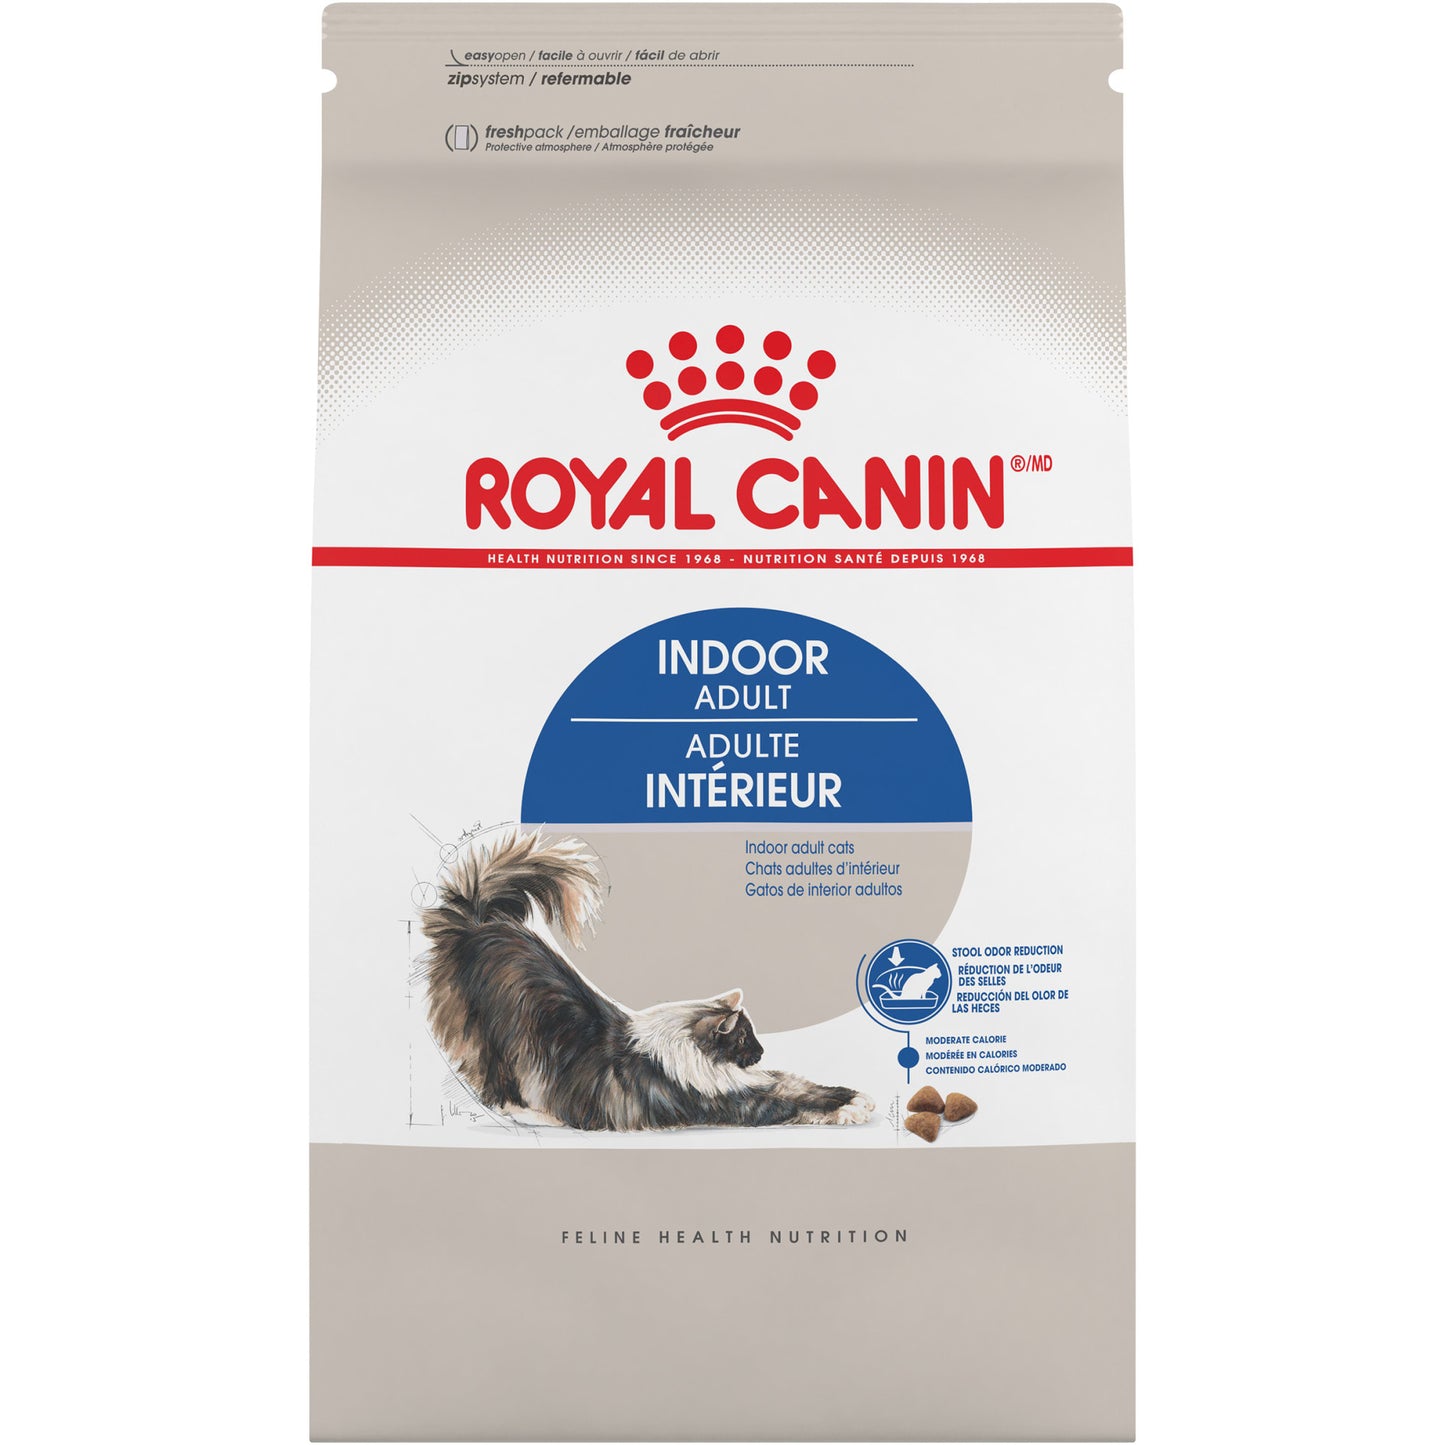 Royal Canin Indoor Adult Dry Cat Food, 7 lb